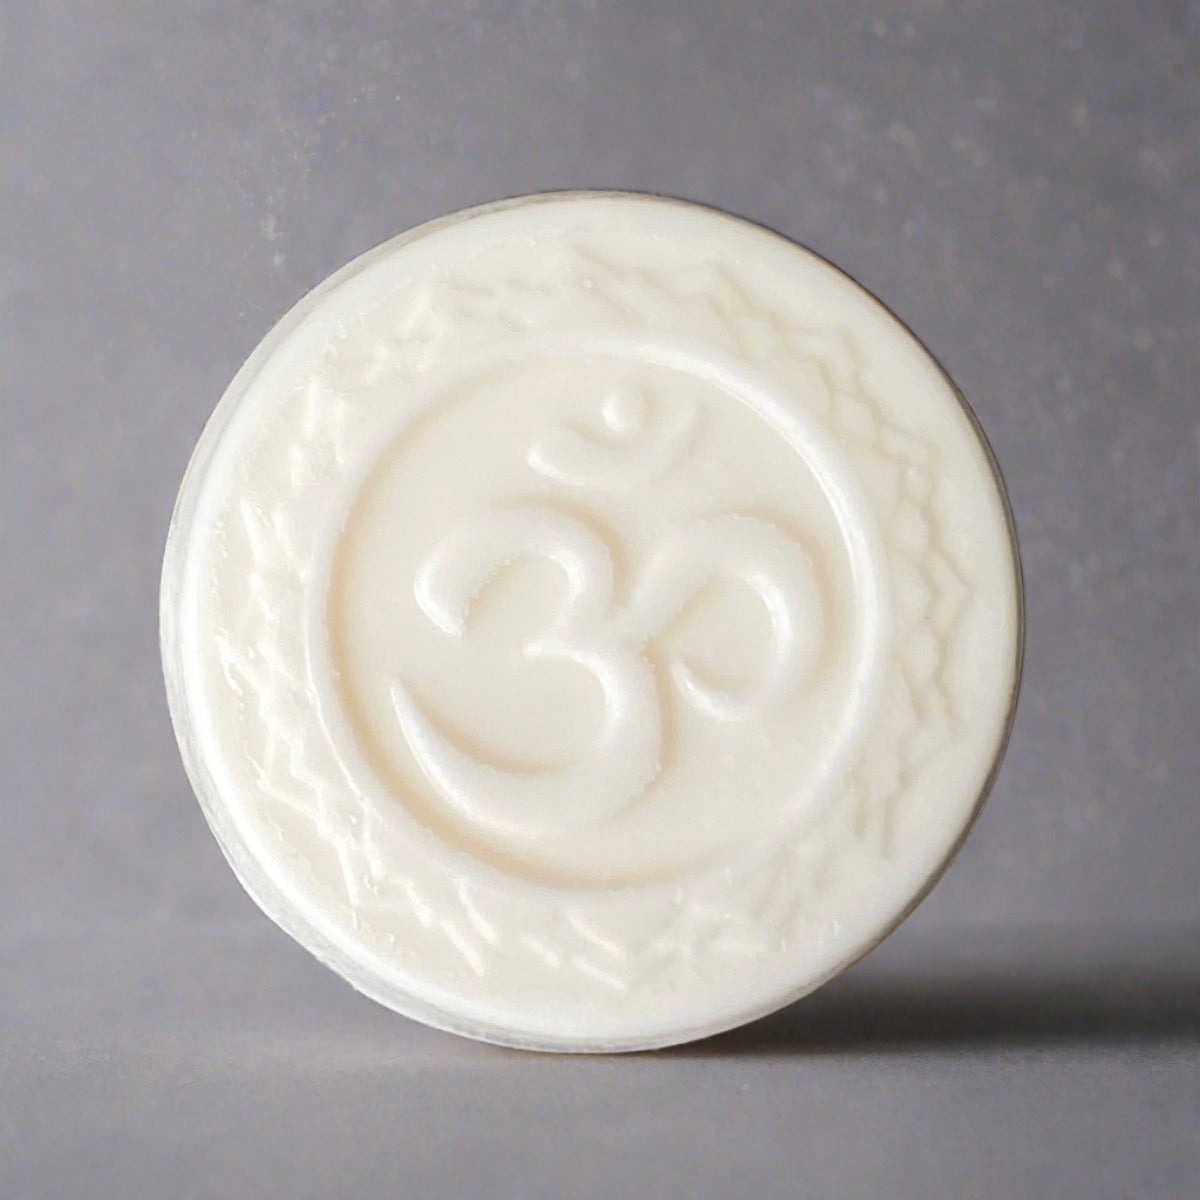 Om Patchouli & Shea butter soap with meditation sticks on rock background